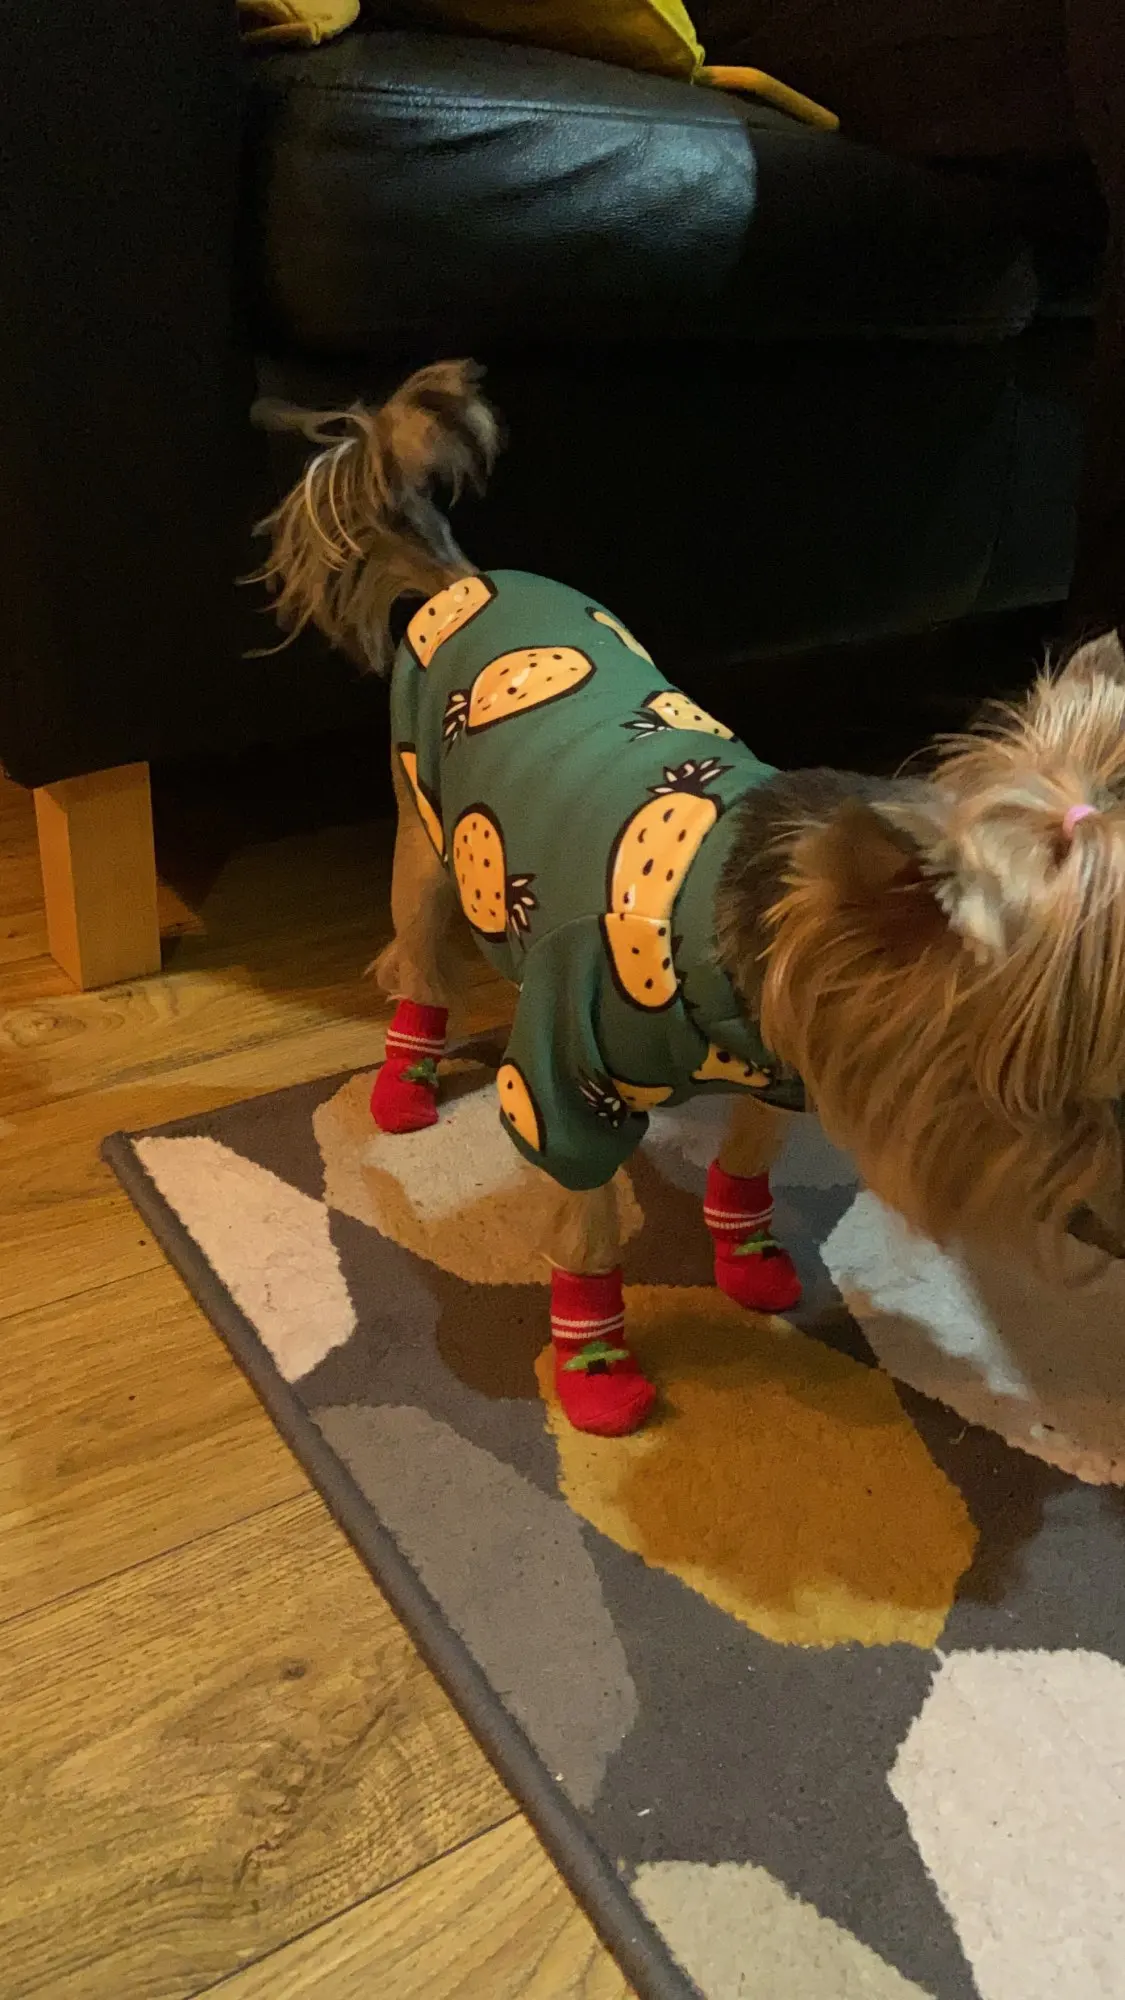 Cute Dog Socks | Puppy Socks | Non-slip Dog Socks photo review